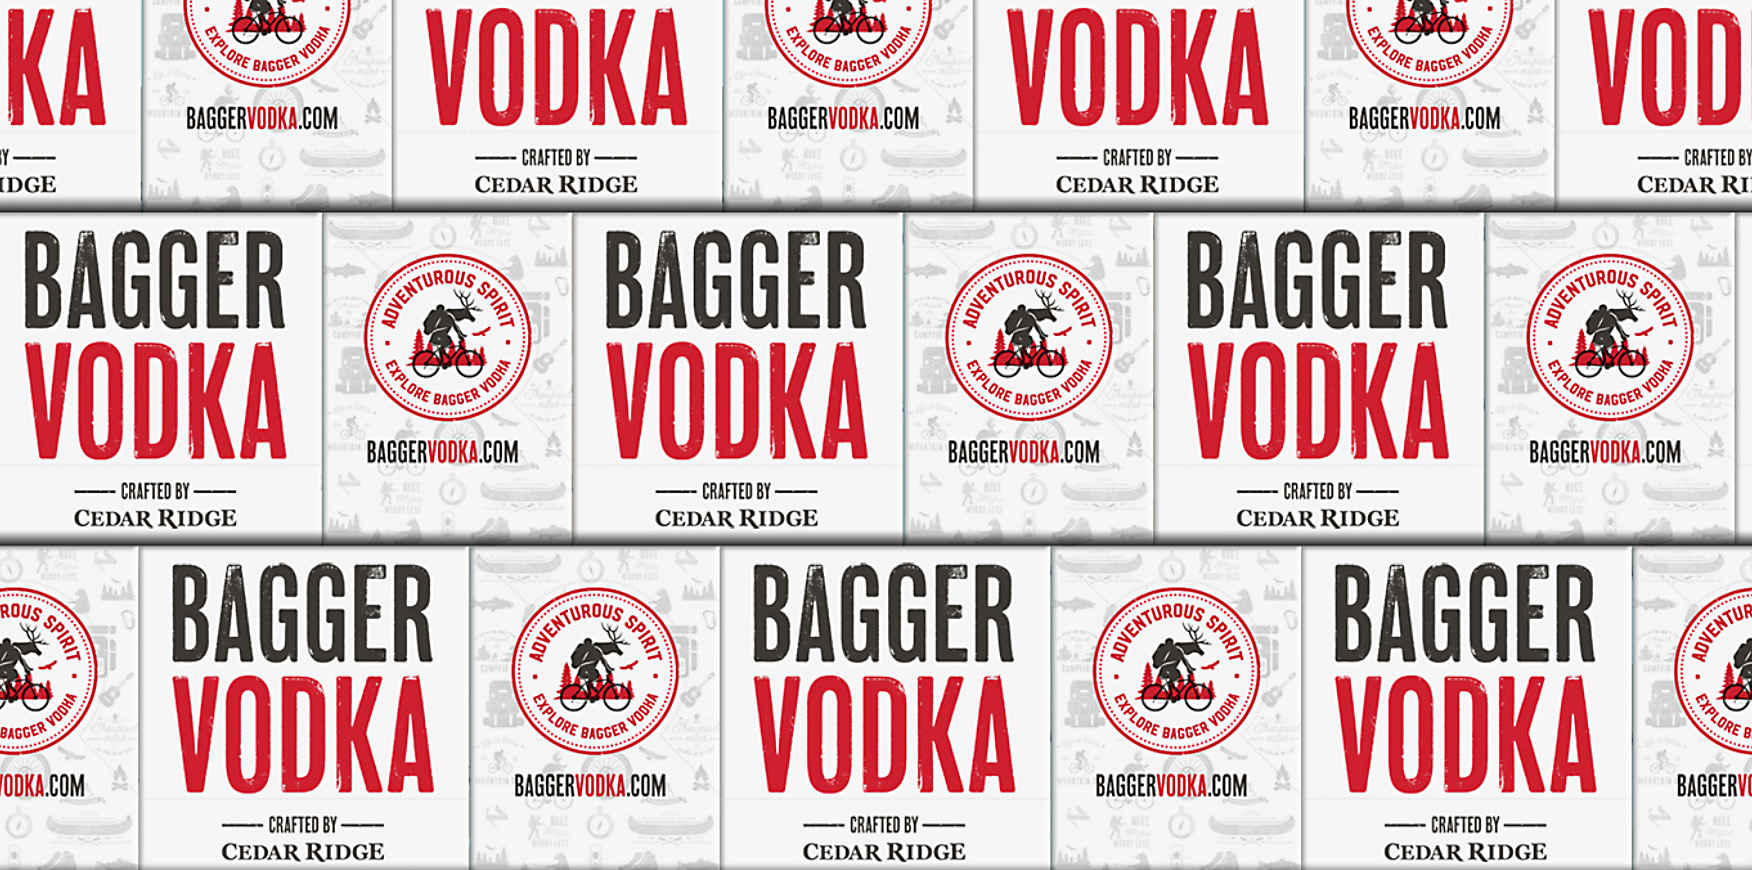 Bagger Vodka Packaging